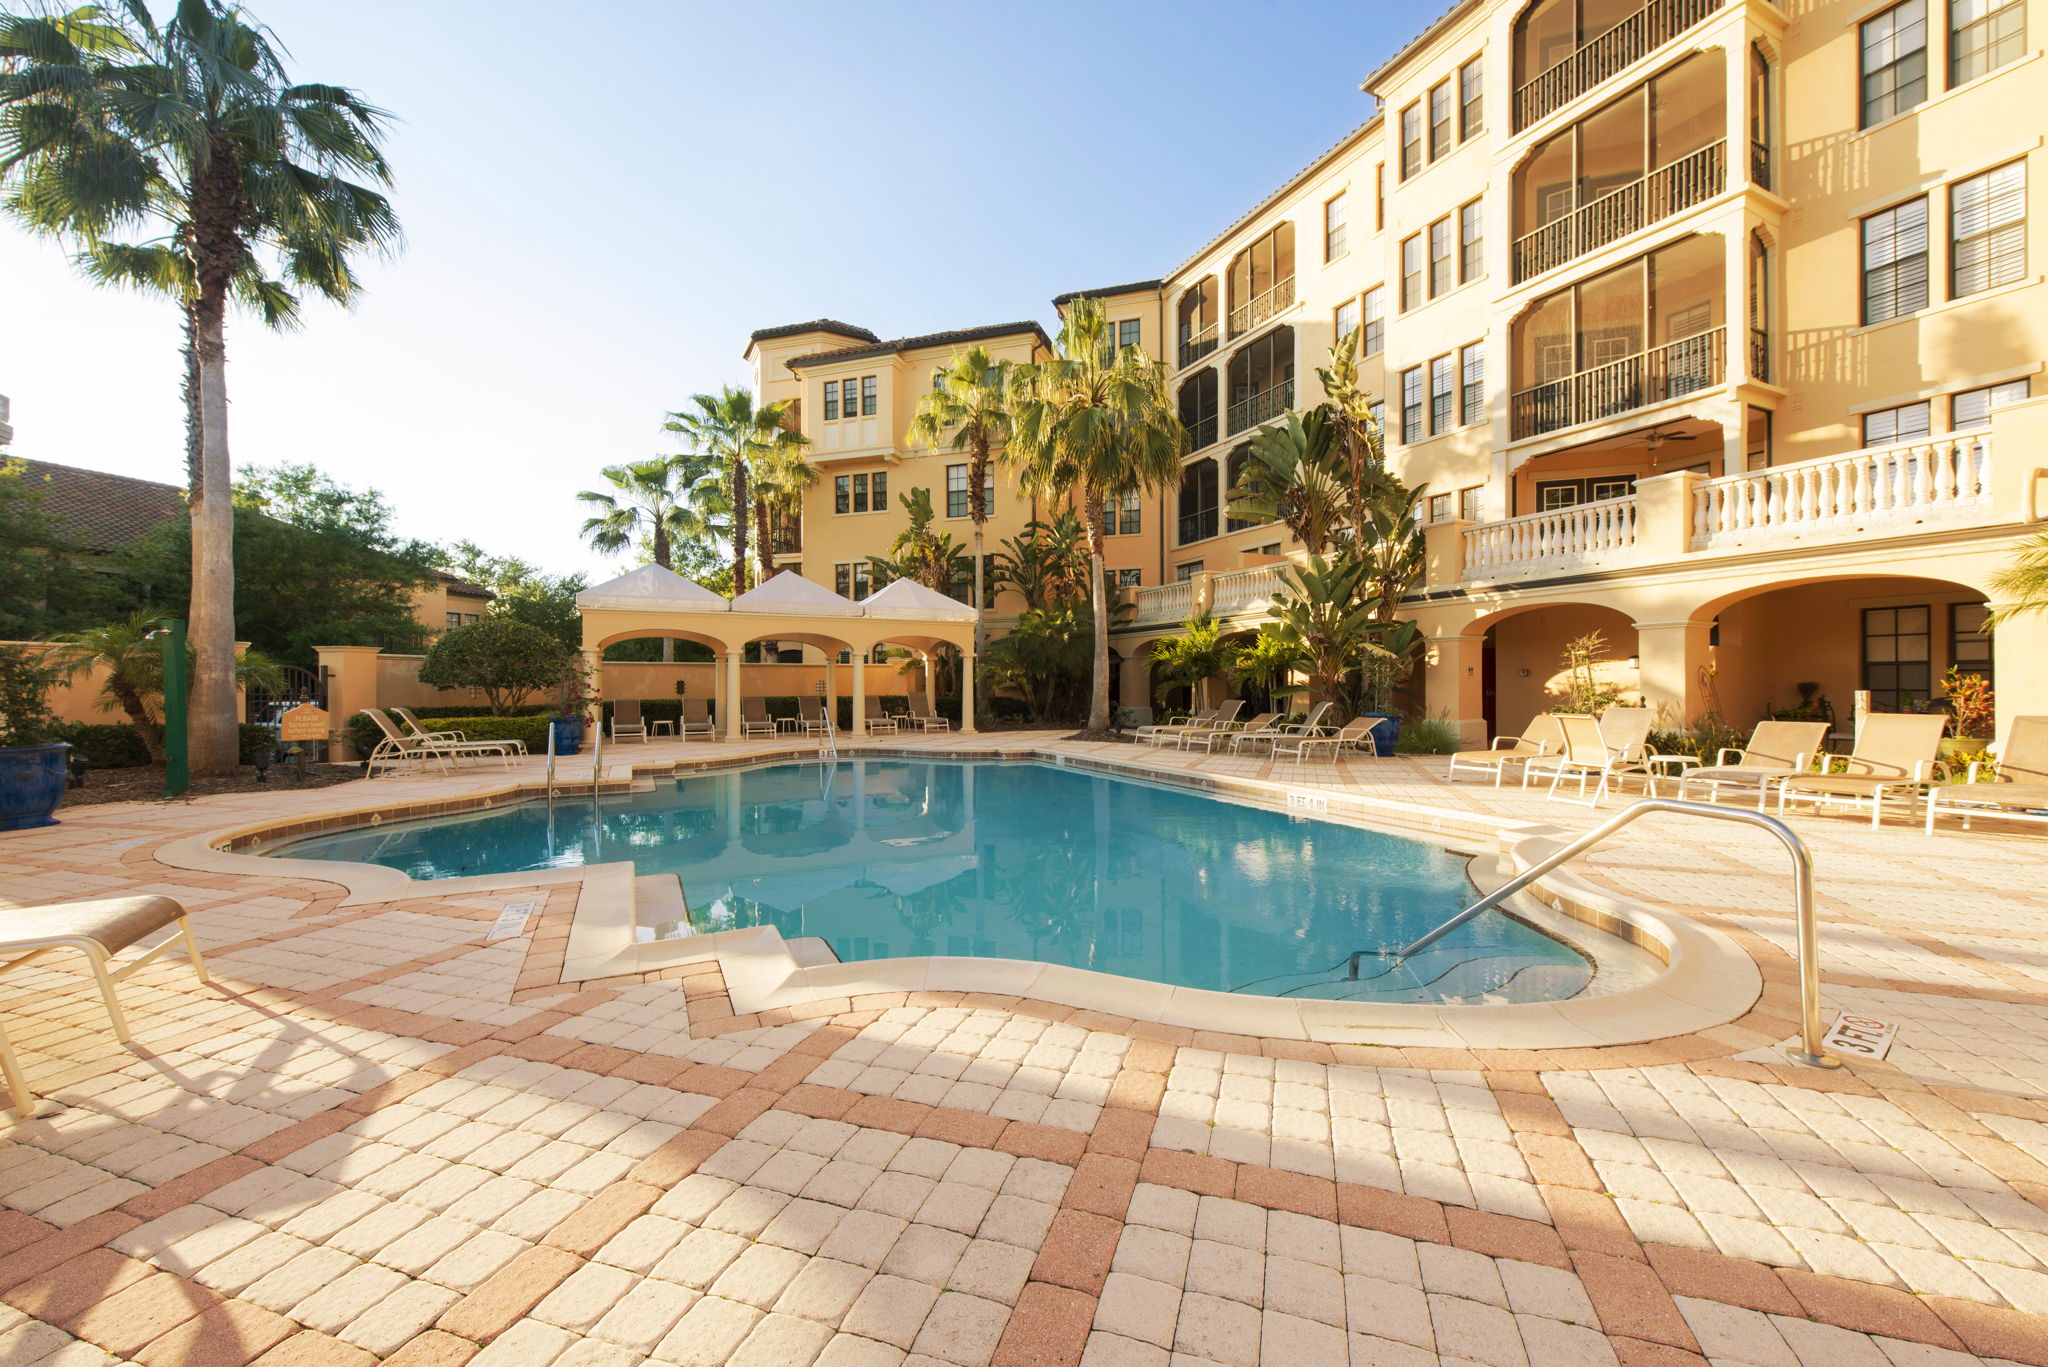 Mirasol Resort Style Heated Pool